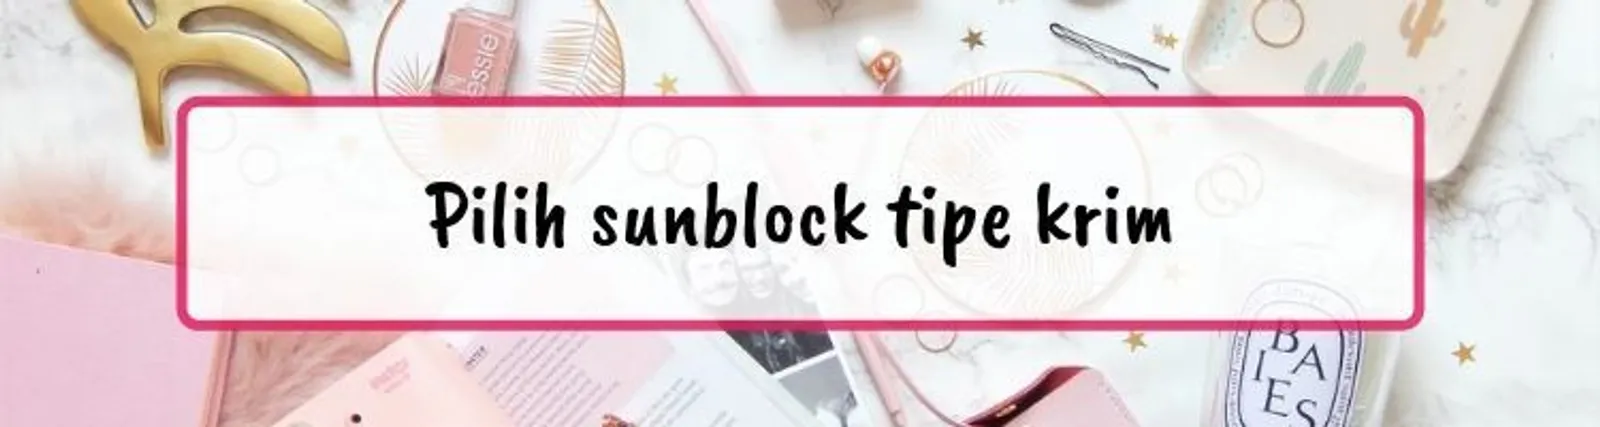 11 Hal yang Perlu Diperhatikan Sebelum Membeli Sunblock